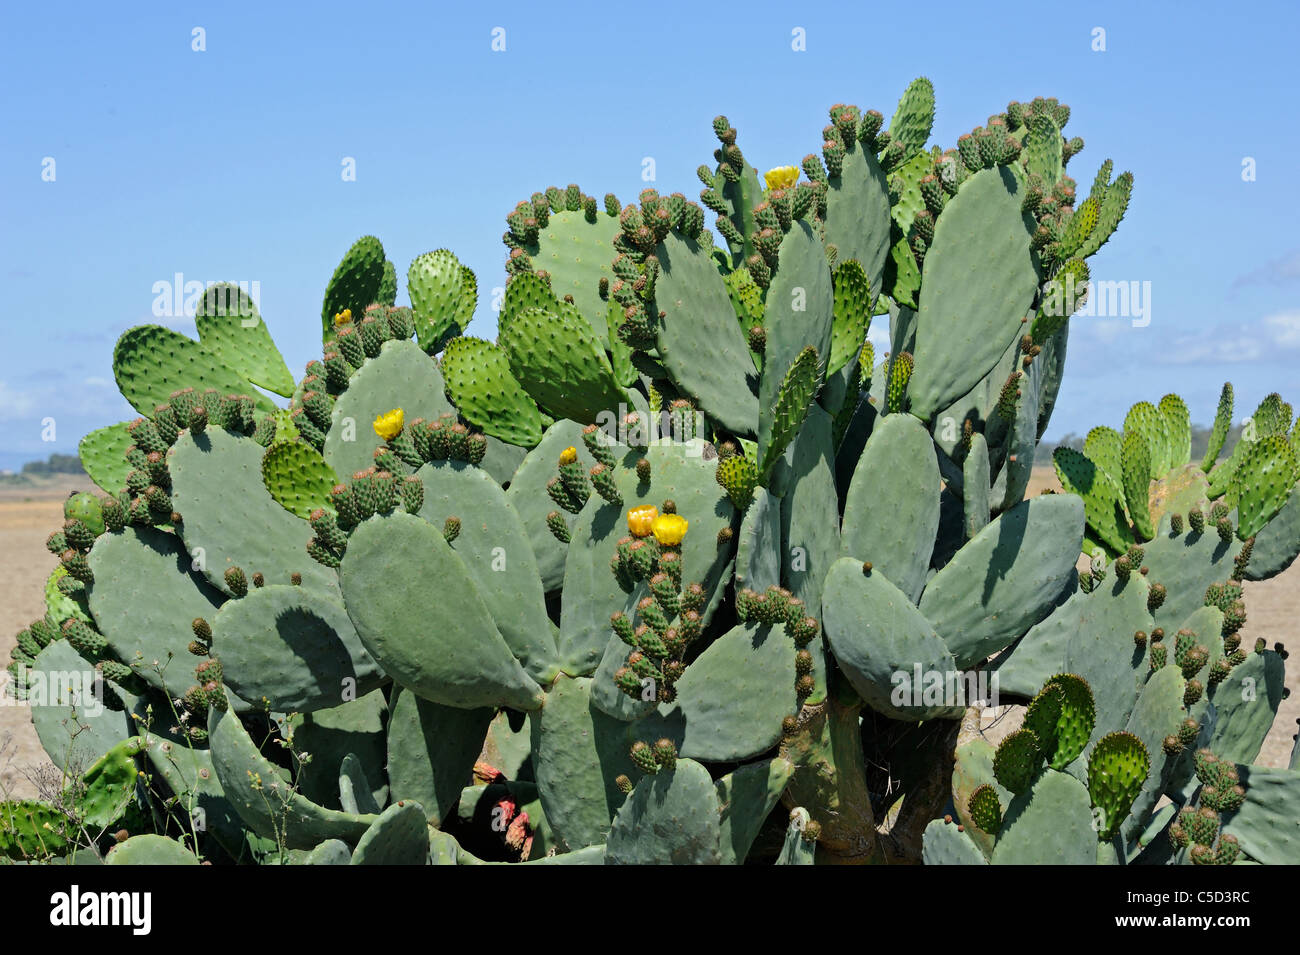 Prickly Pear cactus (Opuntia) plant Stock Photo